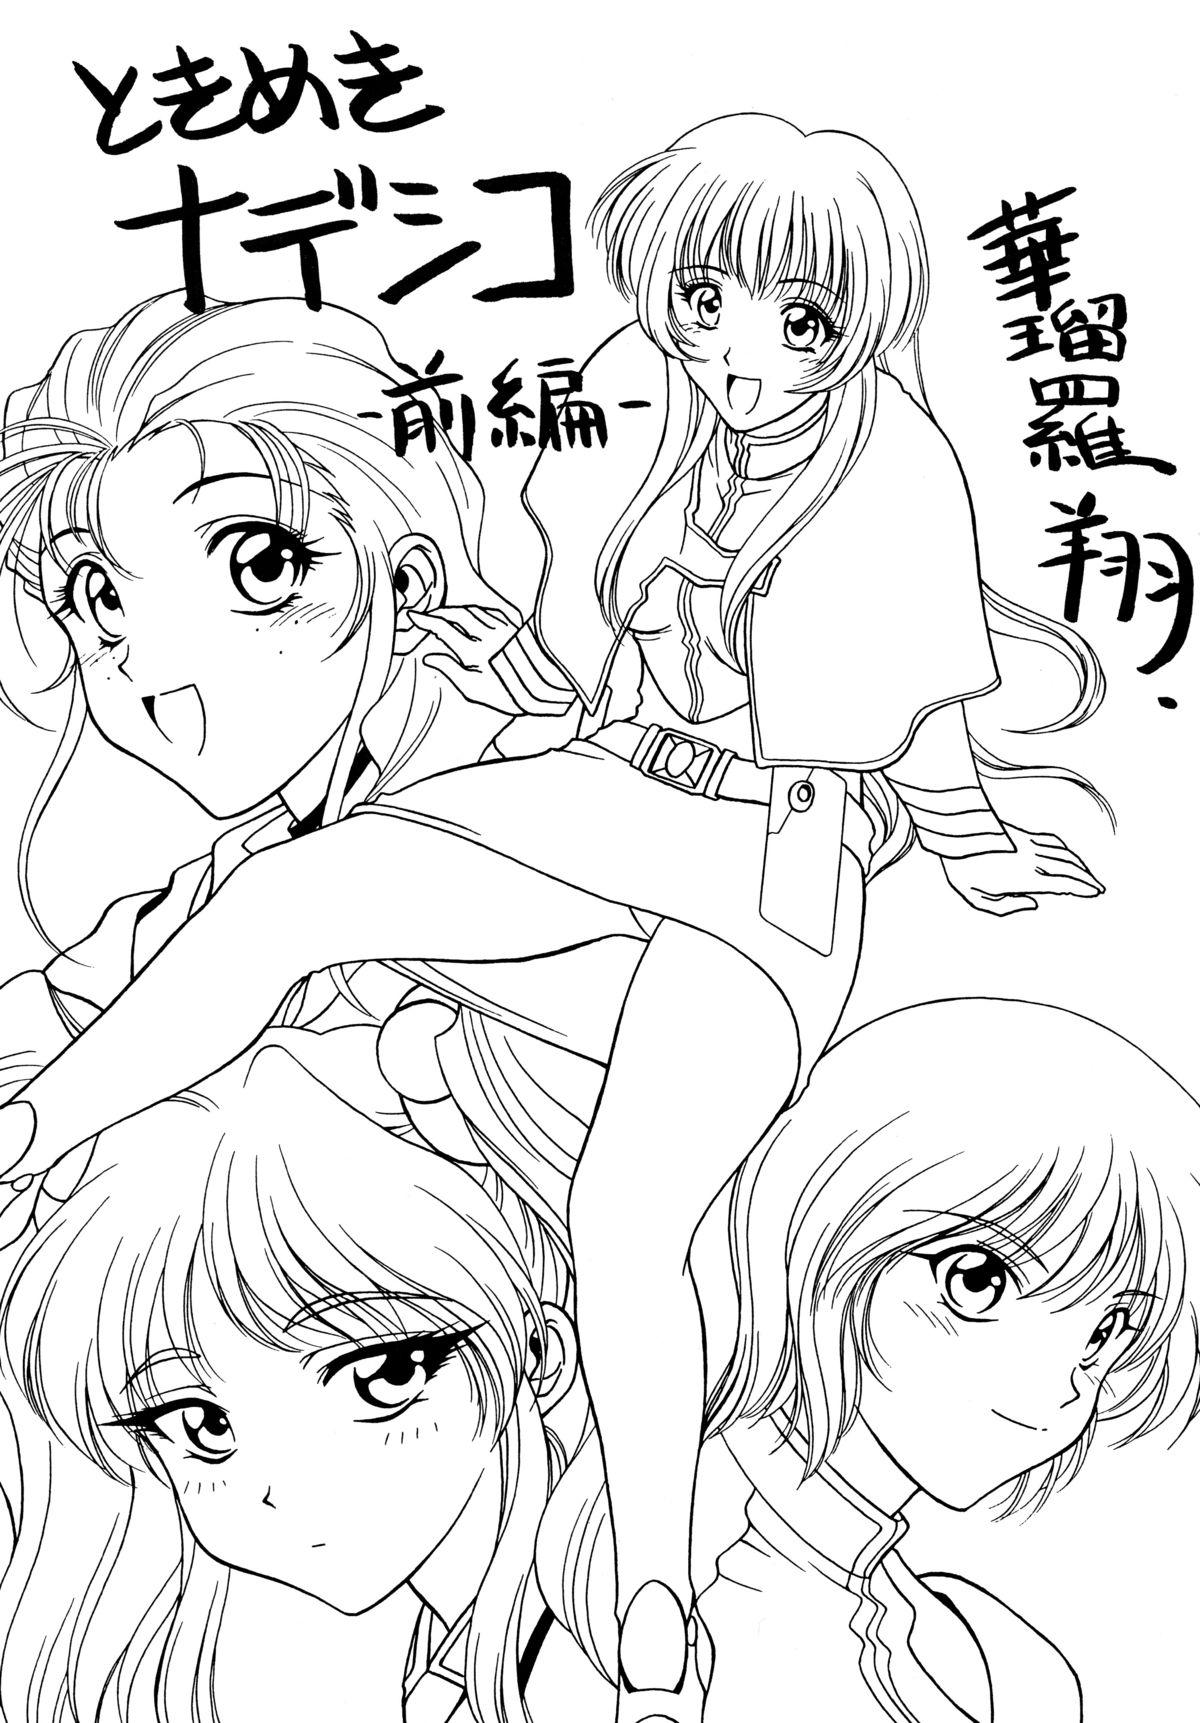 Mms LOVE² BREATH - Sakura taisen Martian successor nadesico Tokimeki memorial Youre under arrest Sex Toys - Page 11